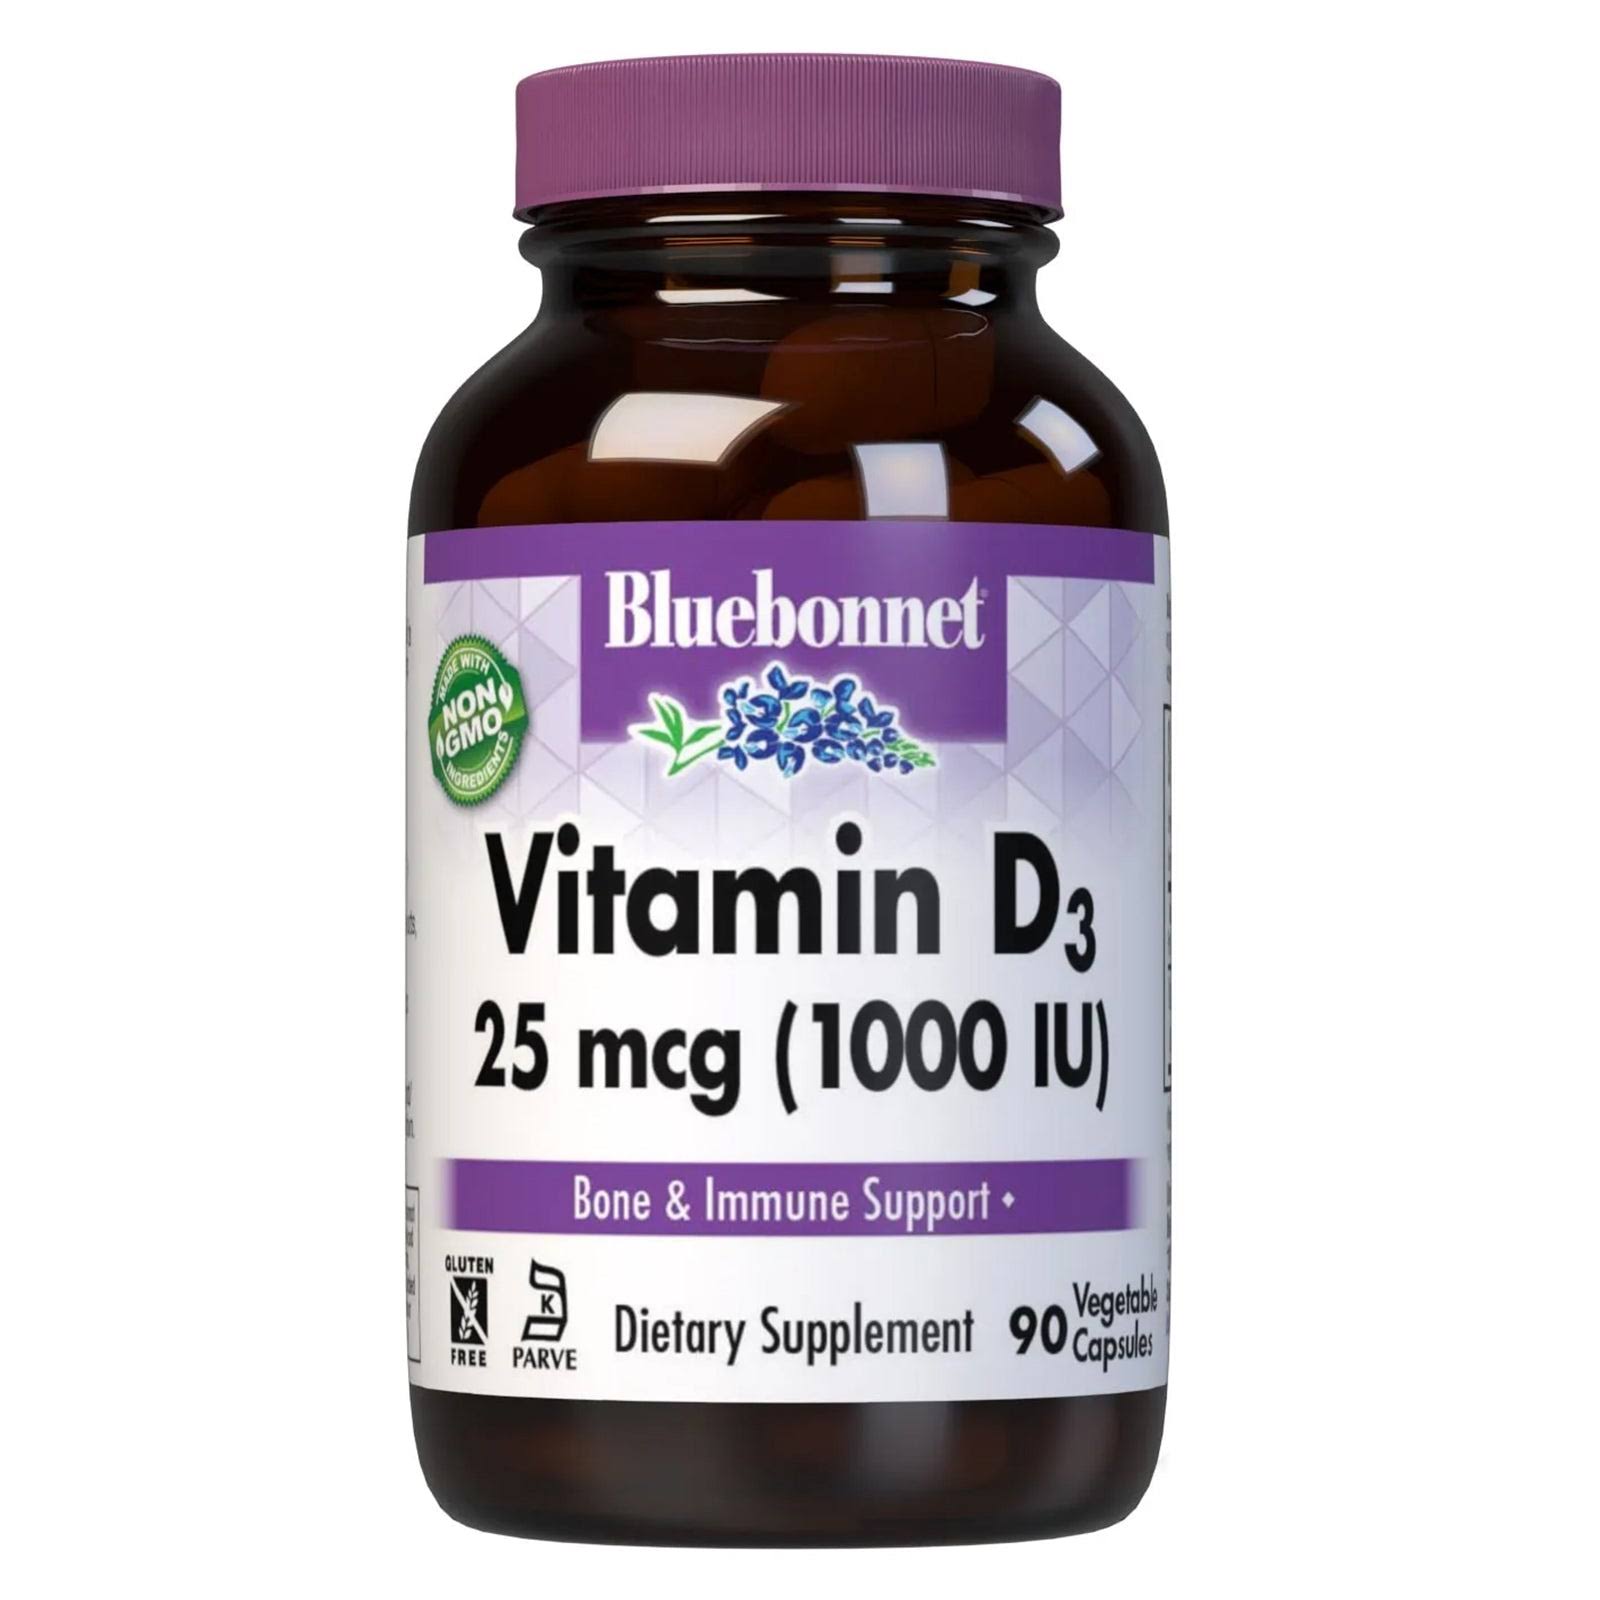 Bluebonnet Vitamin D3 1000 Iu - 90 Vegetarian Capsules